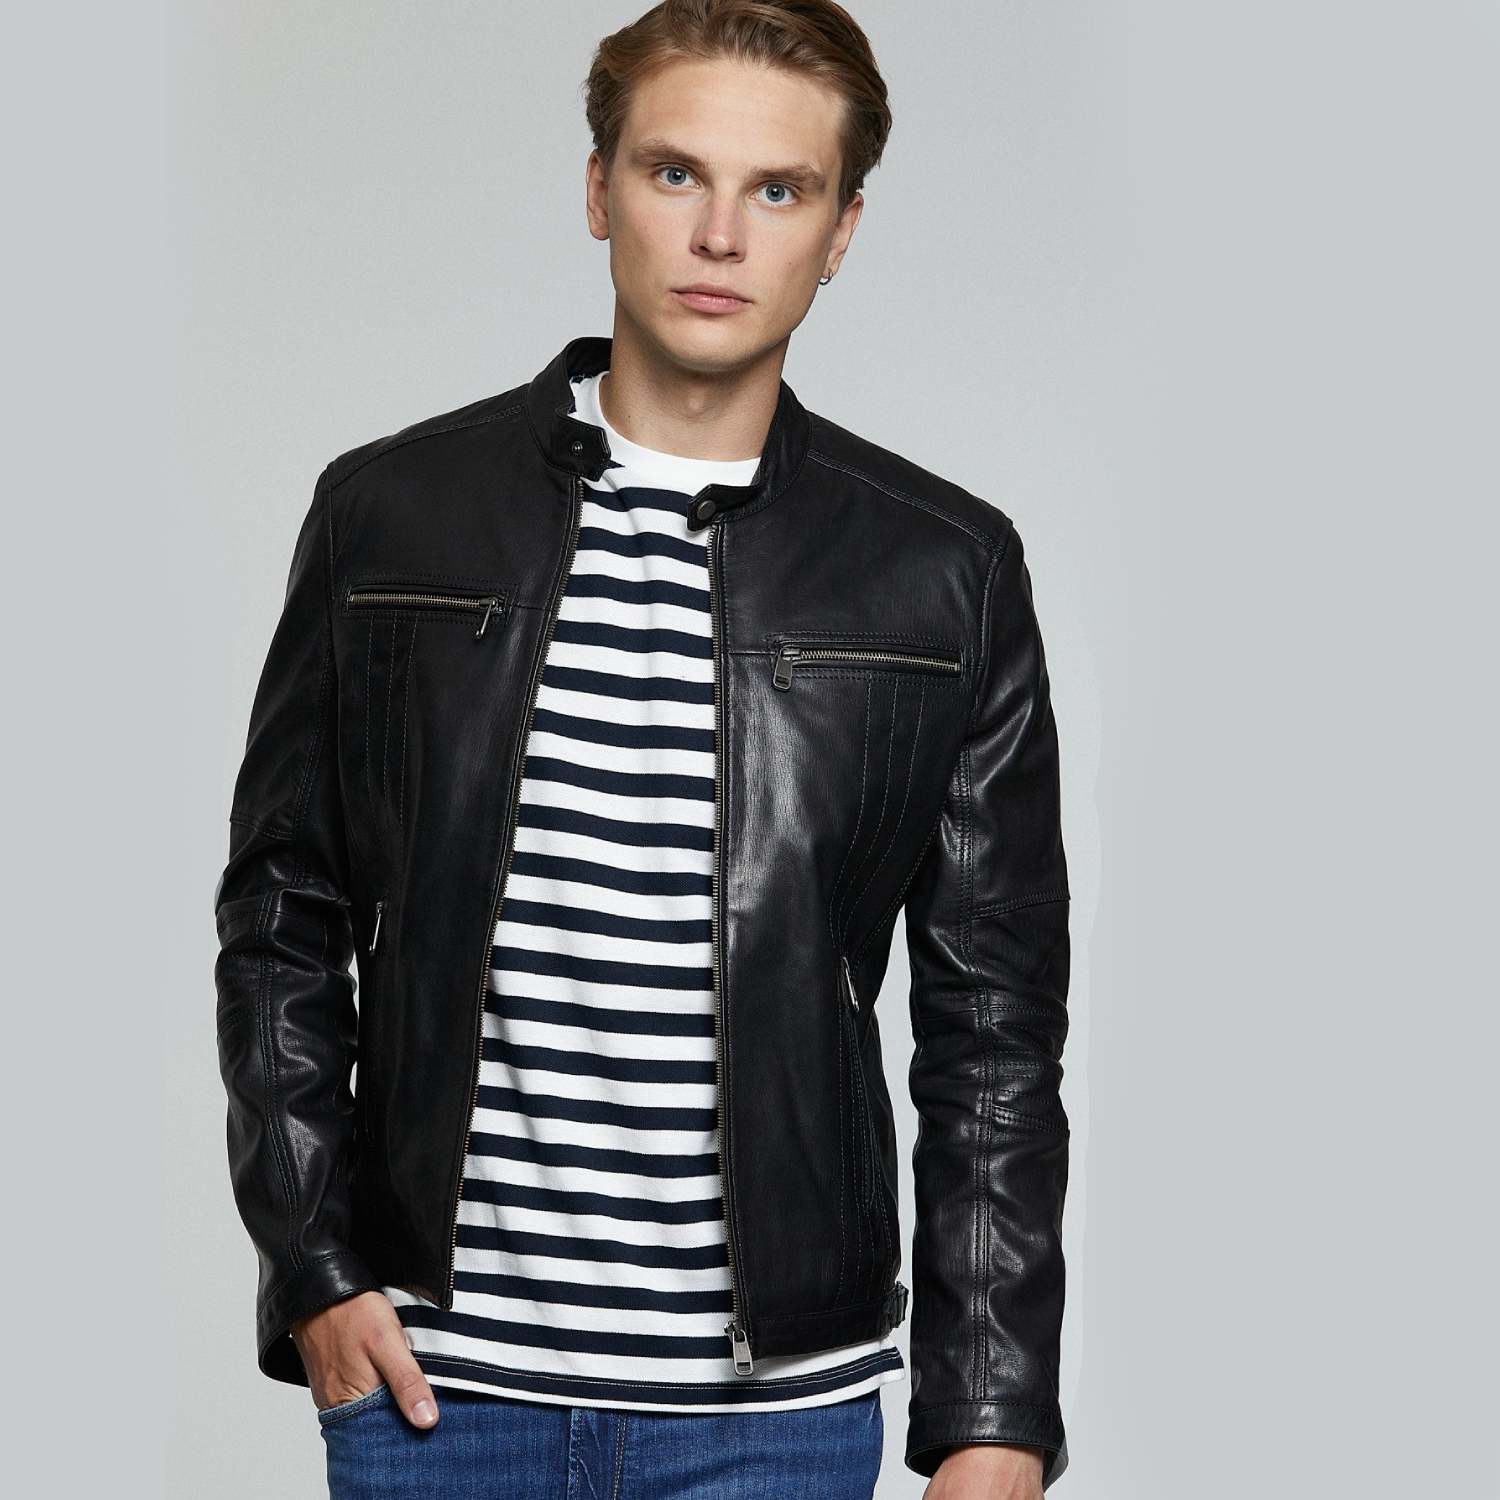 Balmain Leather Biker Jacket in Black for Men Mens Clothing Jackets Leather jackets Save 9% 